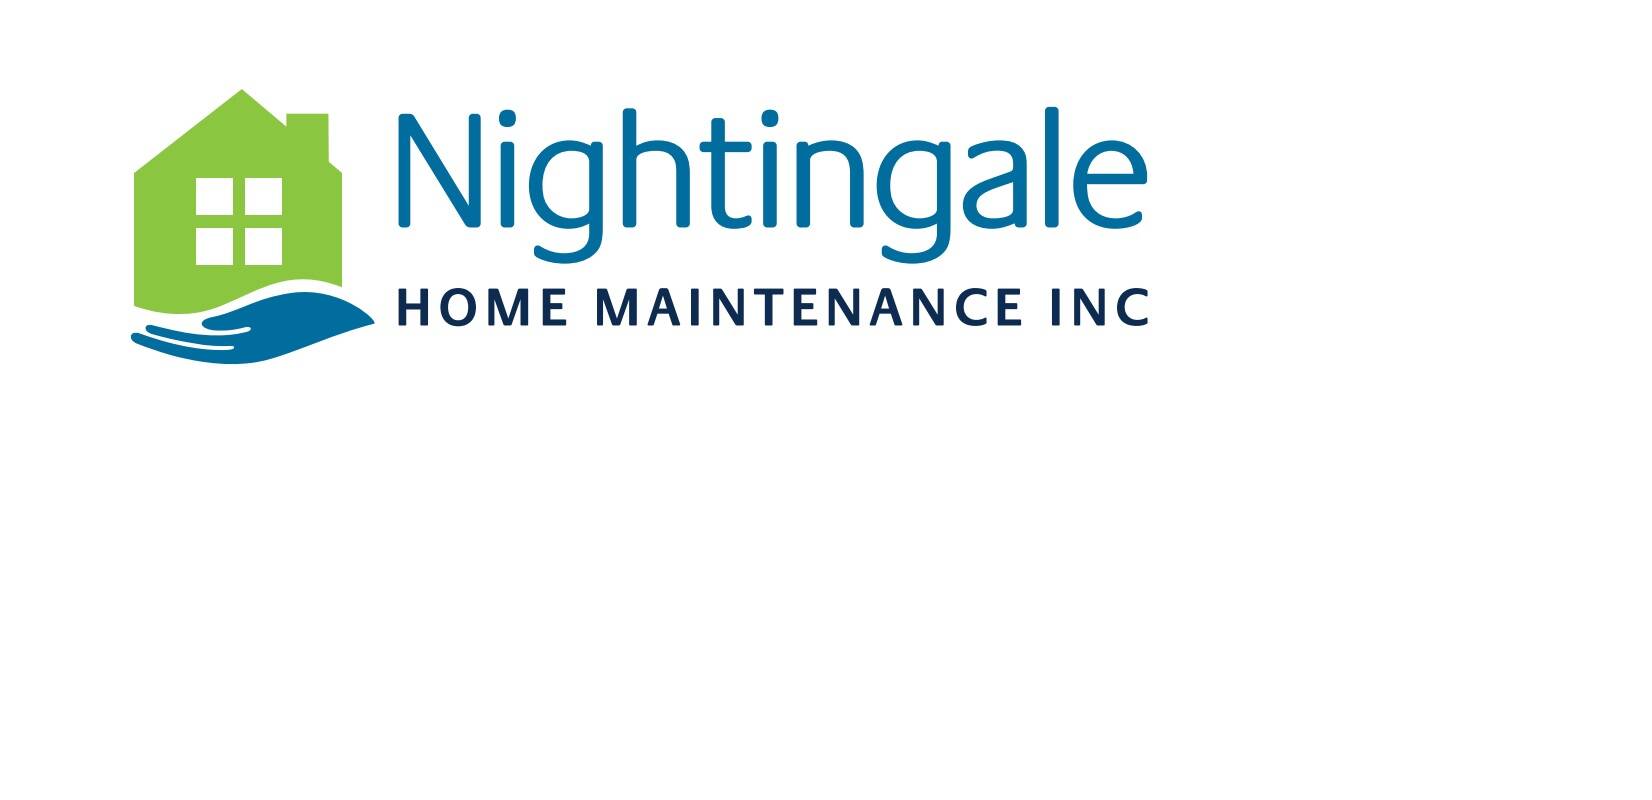 Nightingale Home Maintenance Inc